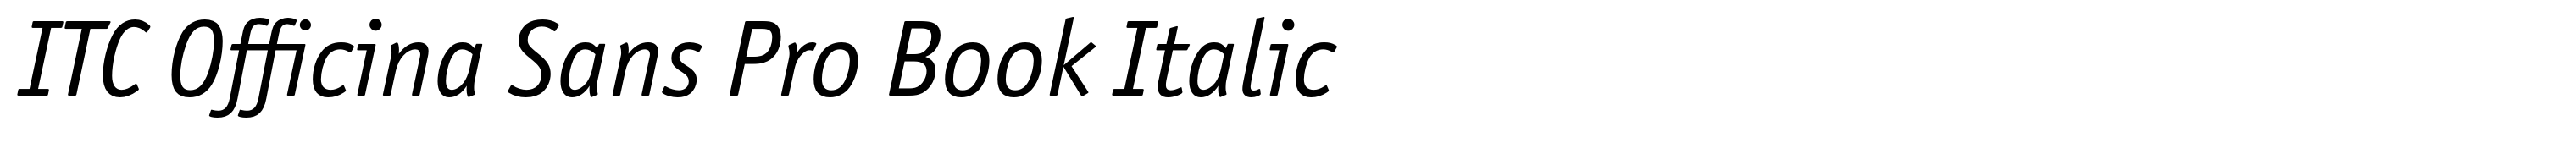 ITC Officina Sans Pro Book Italic